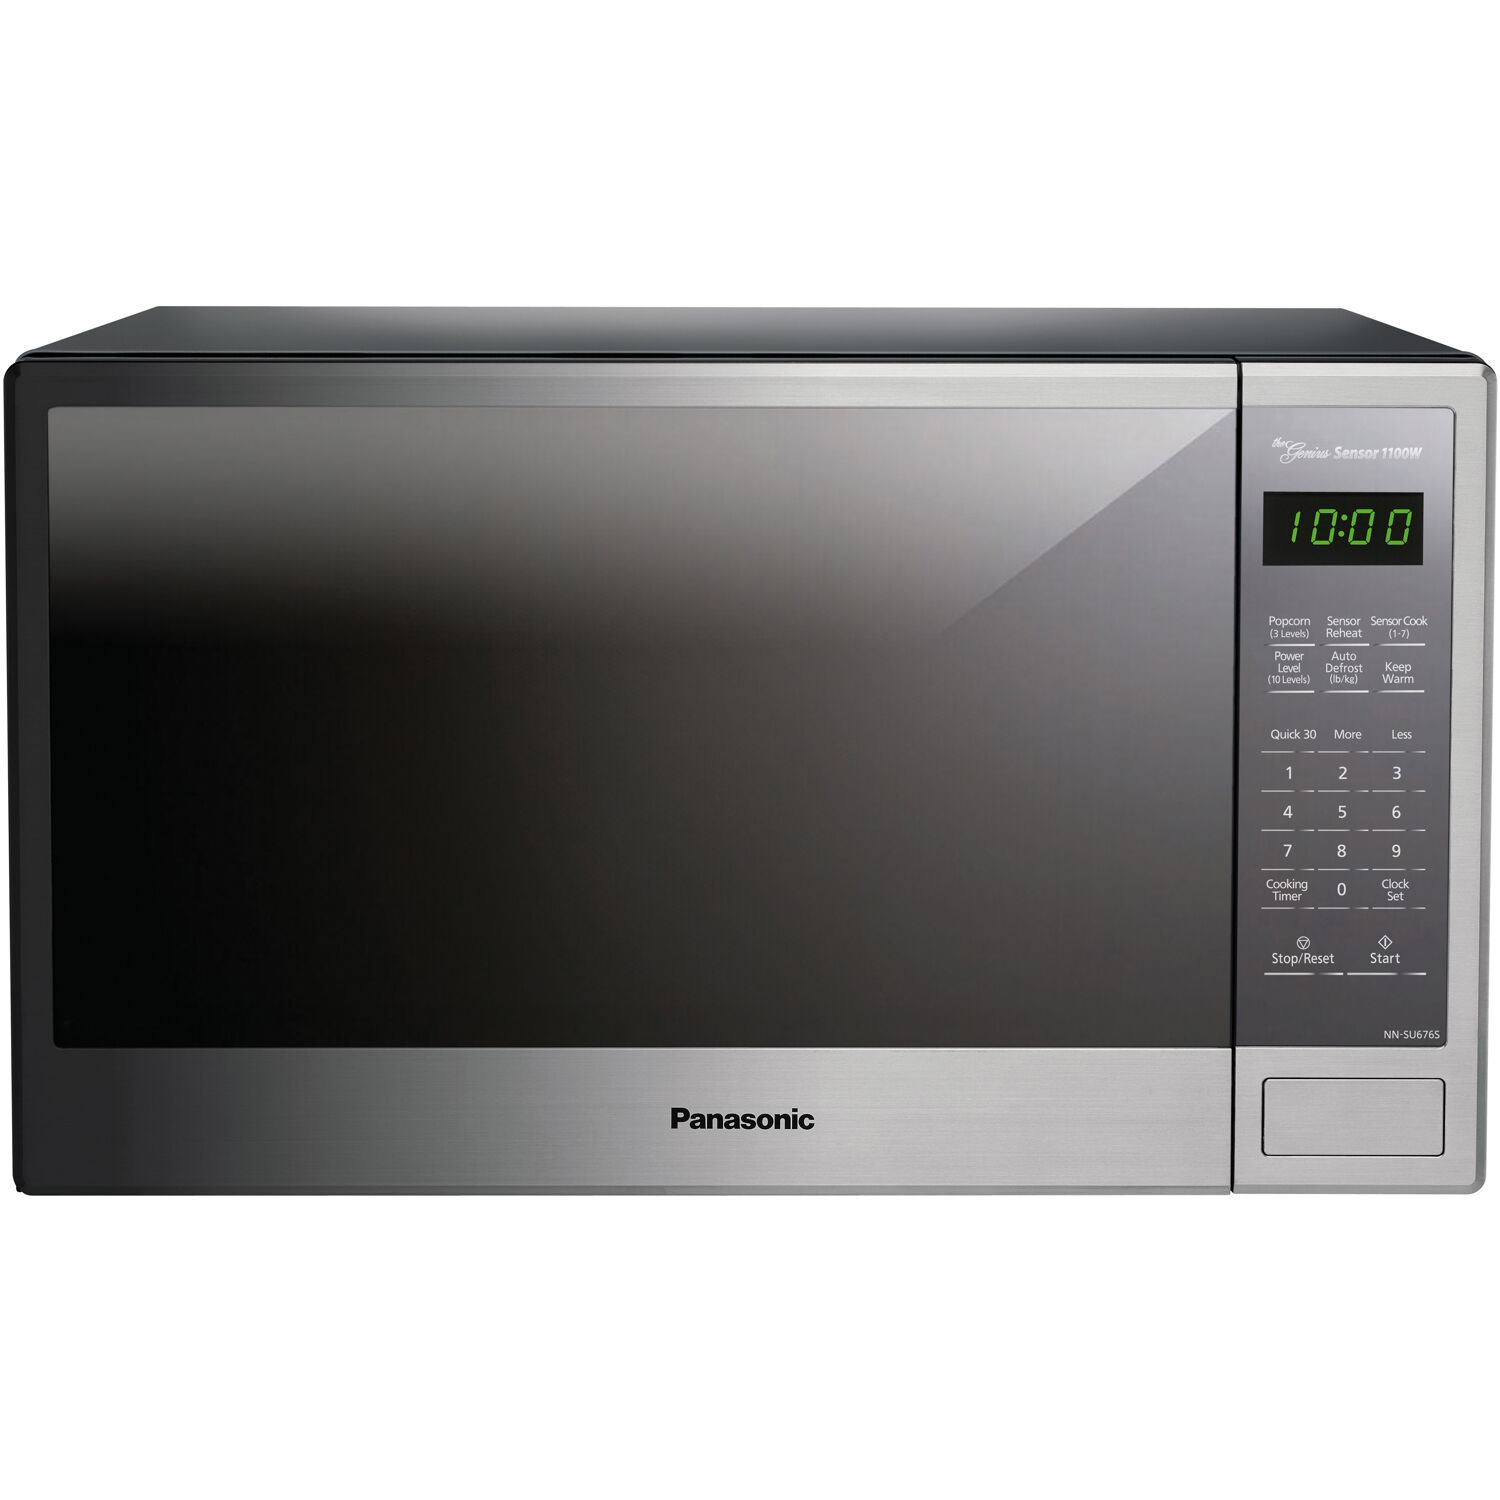 Panasonic Genius Sensor 1.3-Cu. Ft. 1100W Countertop Microwave Oven in Stainless Steel - image 1 of 6